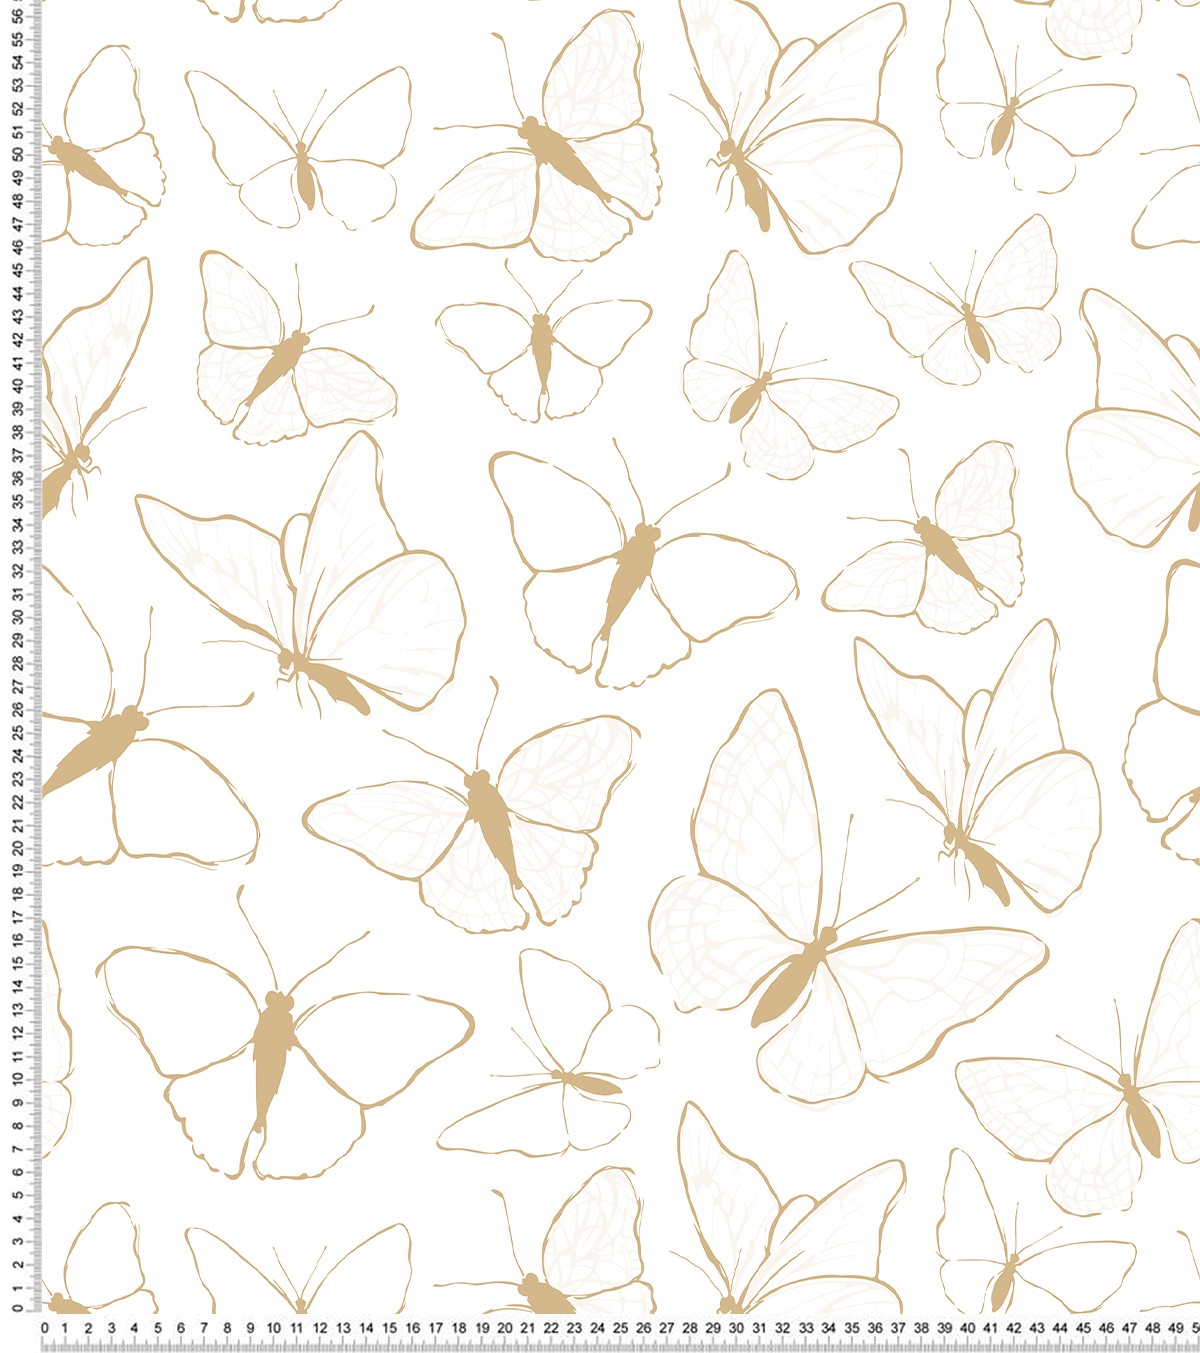 Picnic Day - Children's Wallpaper - Butterfly Motif